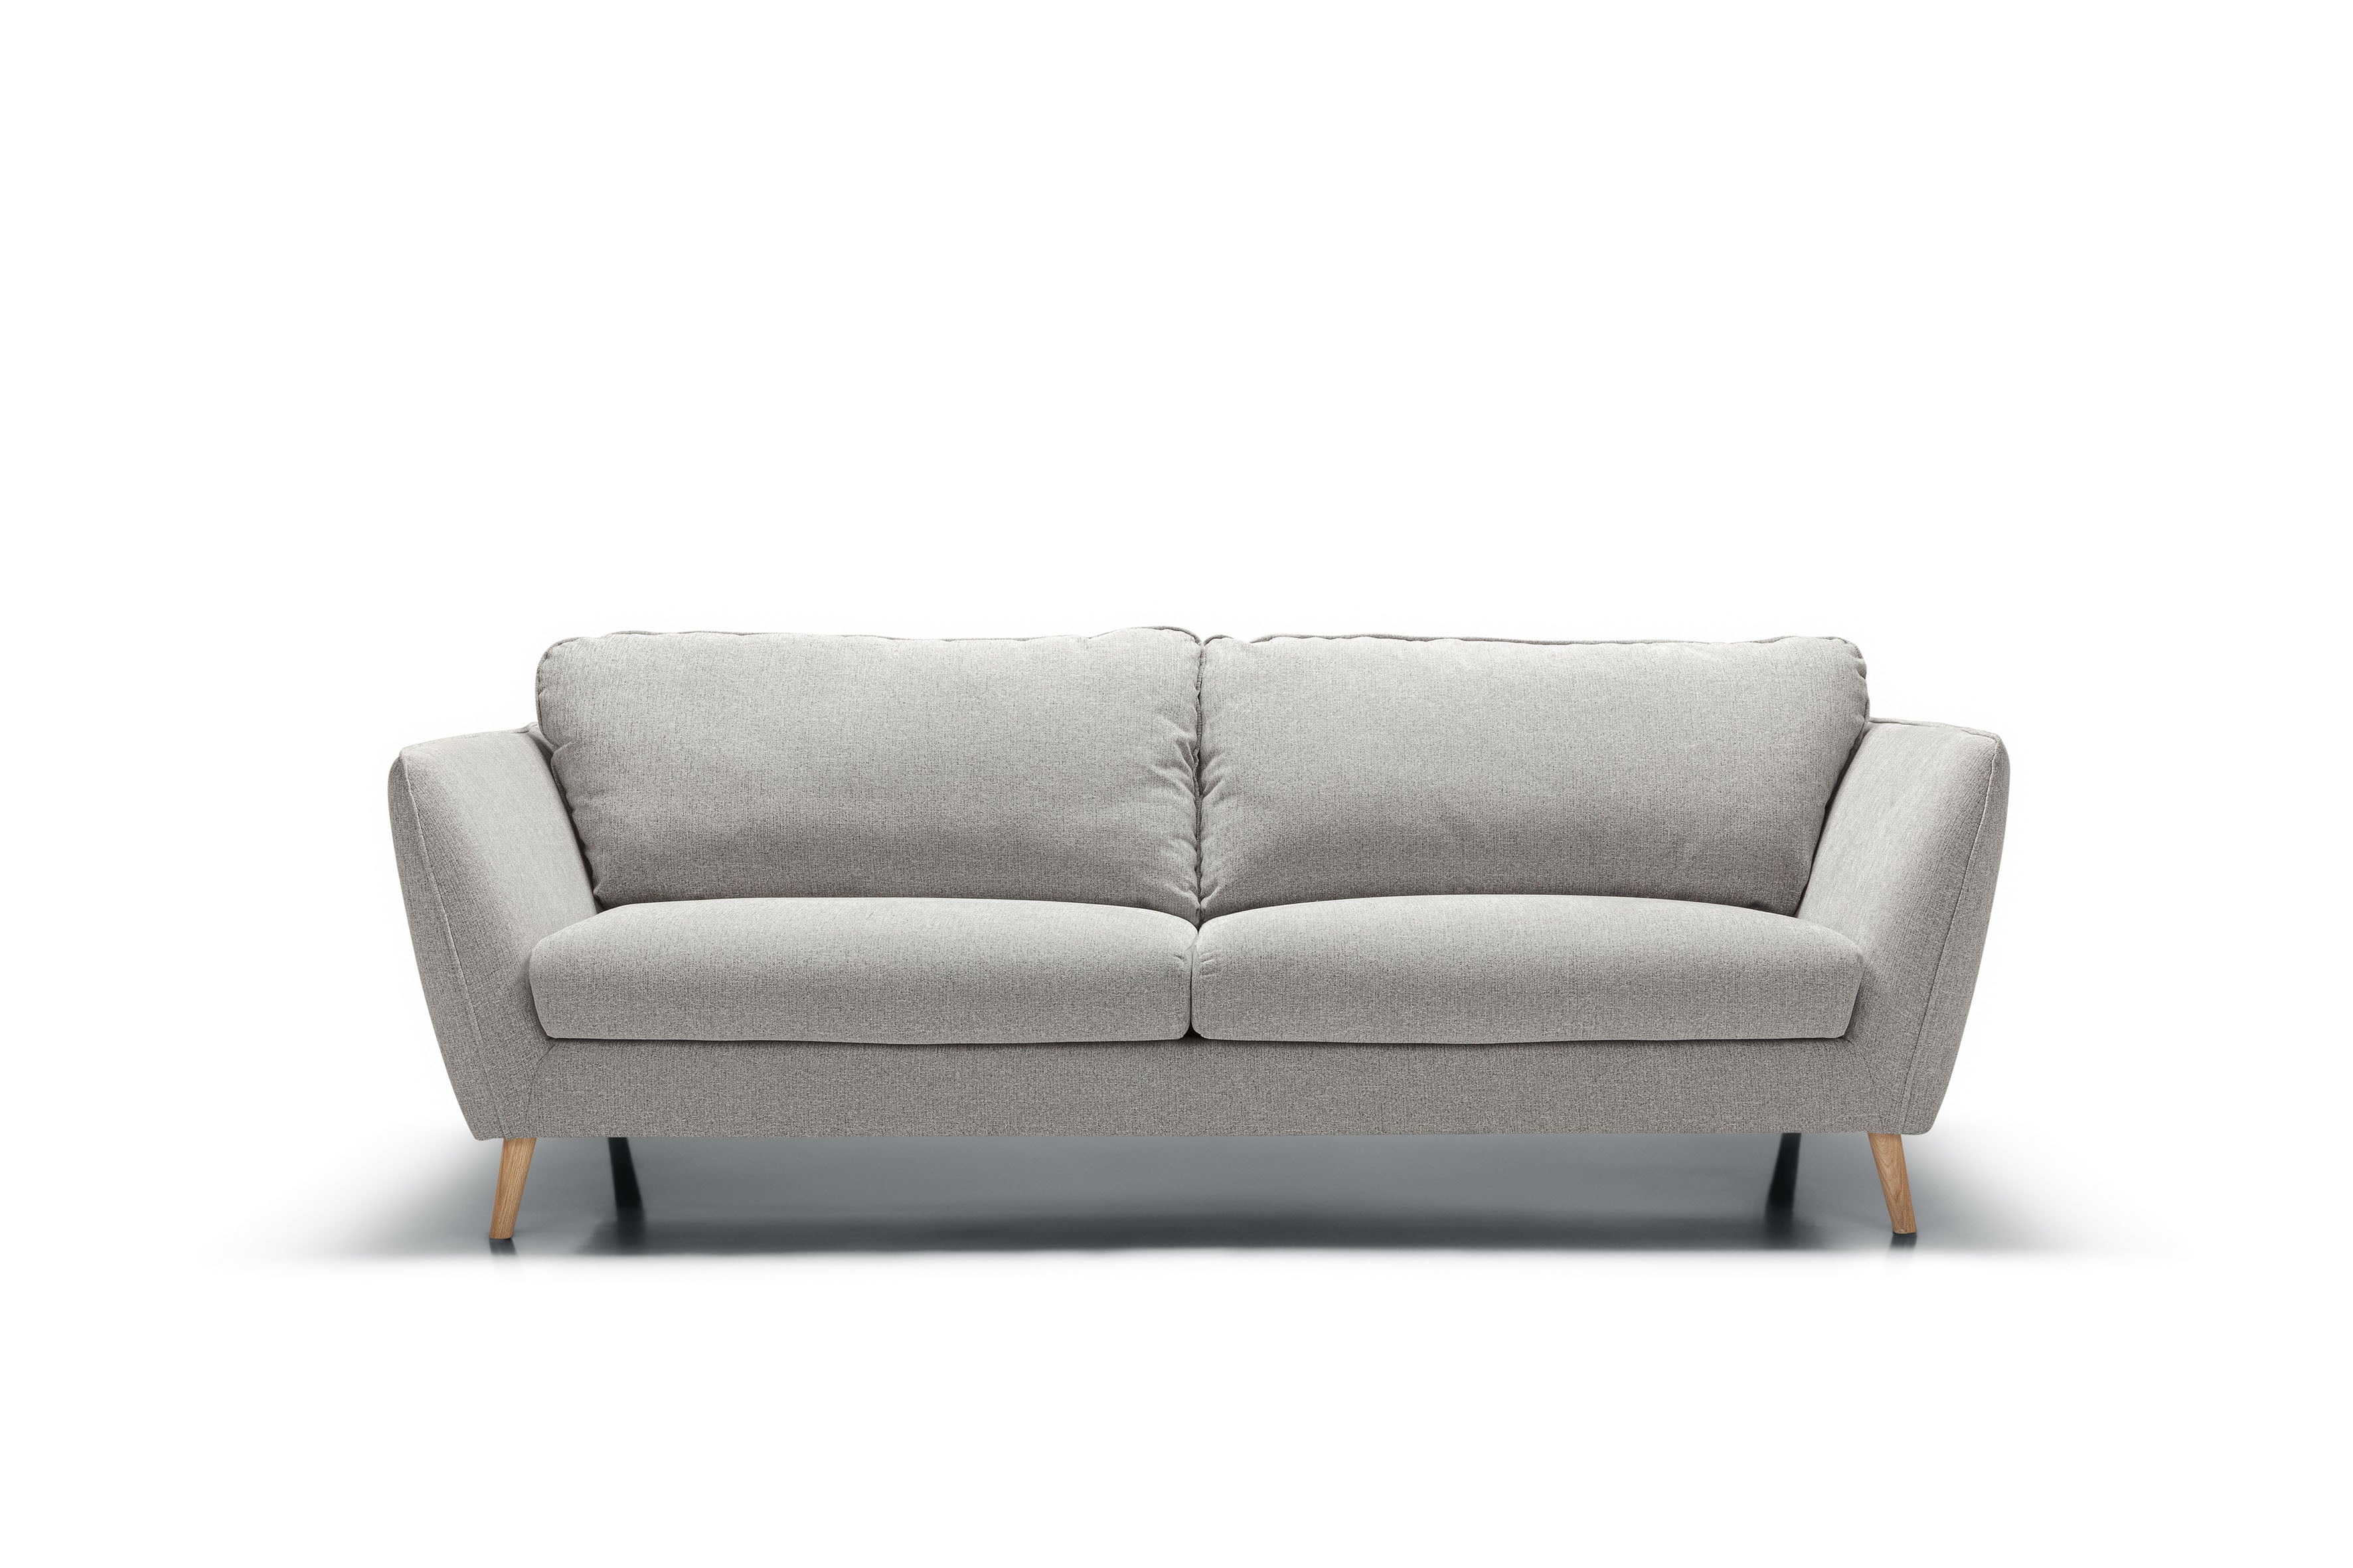 Mastrella Siren 3 Seater Standard Sofa